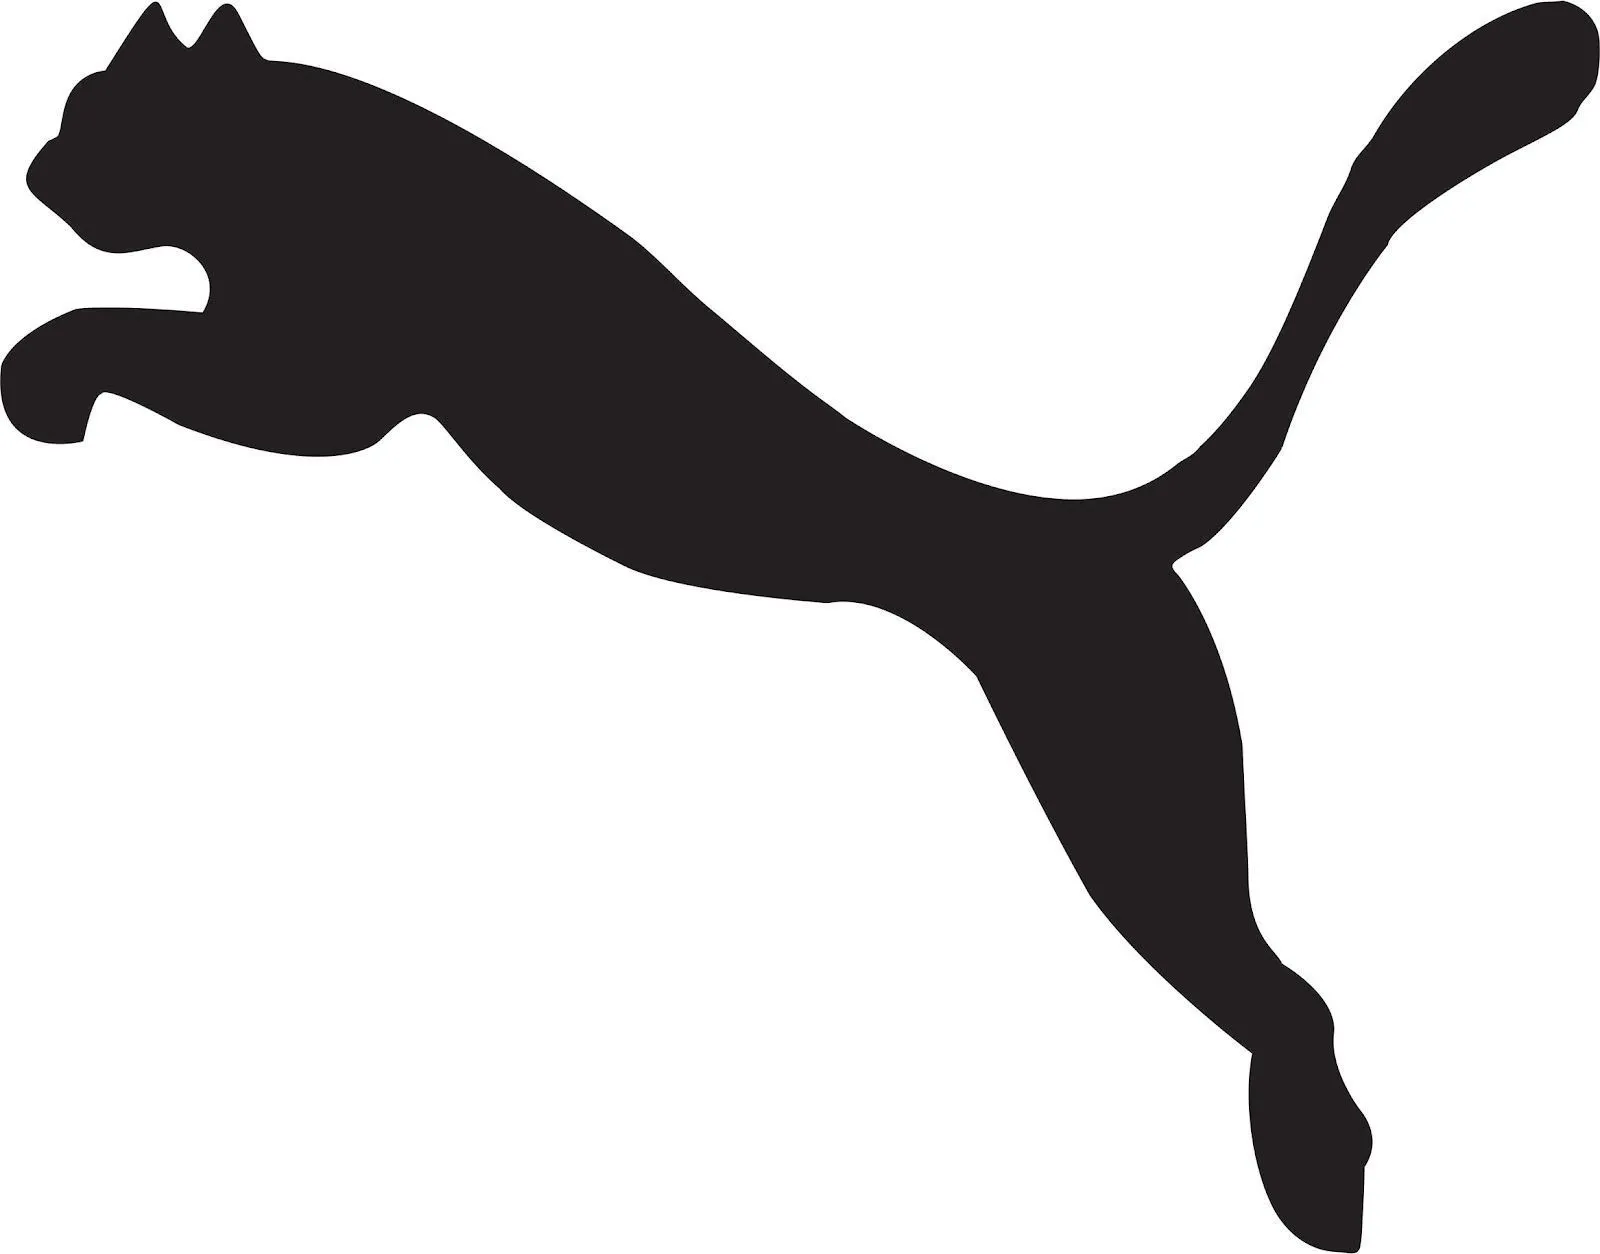 Puma Logo Vector Download | Shirt ideas | Pinterest | Logos and Pumas